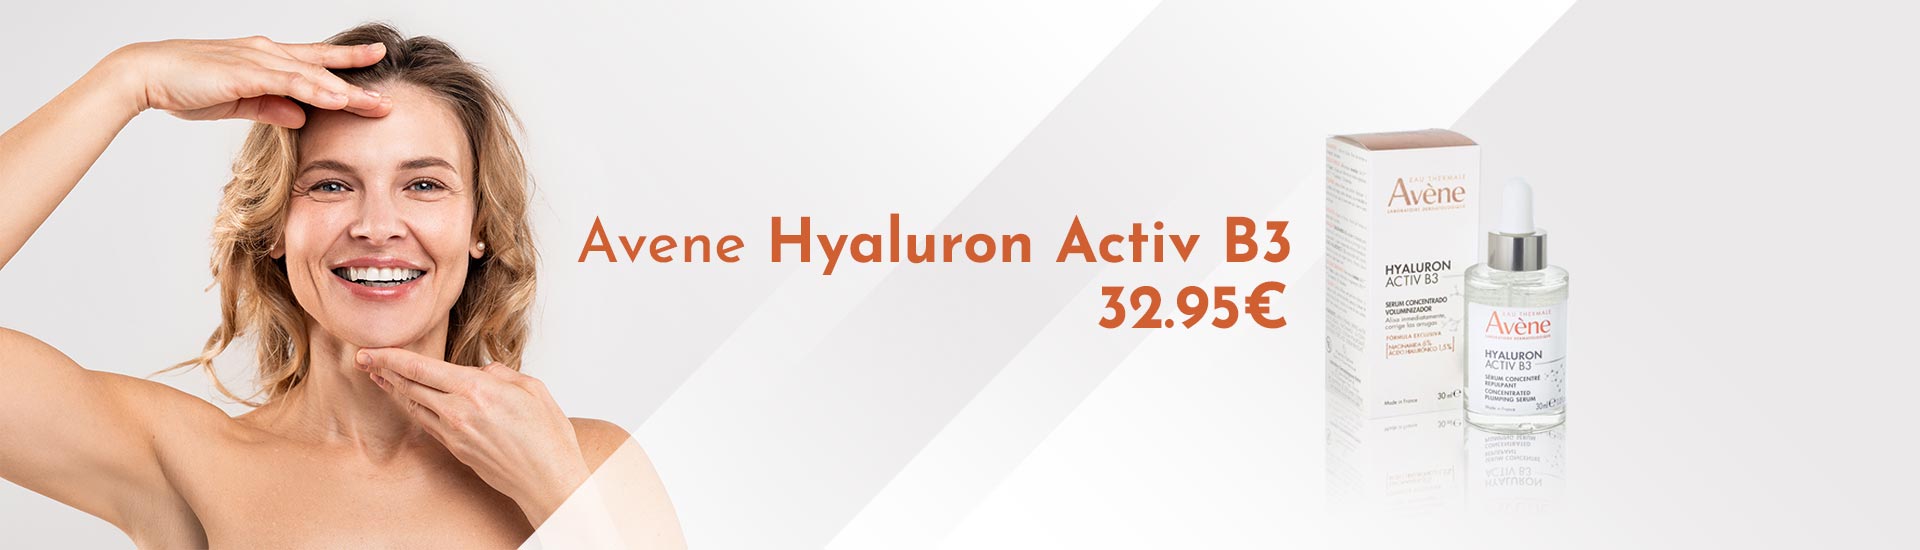 Avene Hyaluron Activ B3